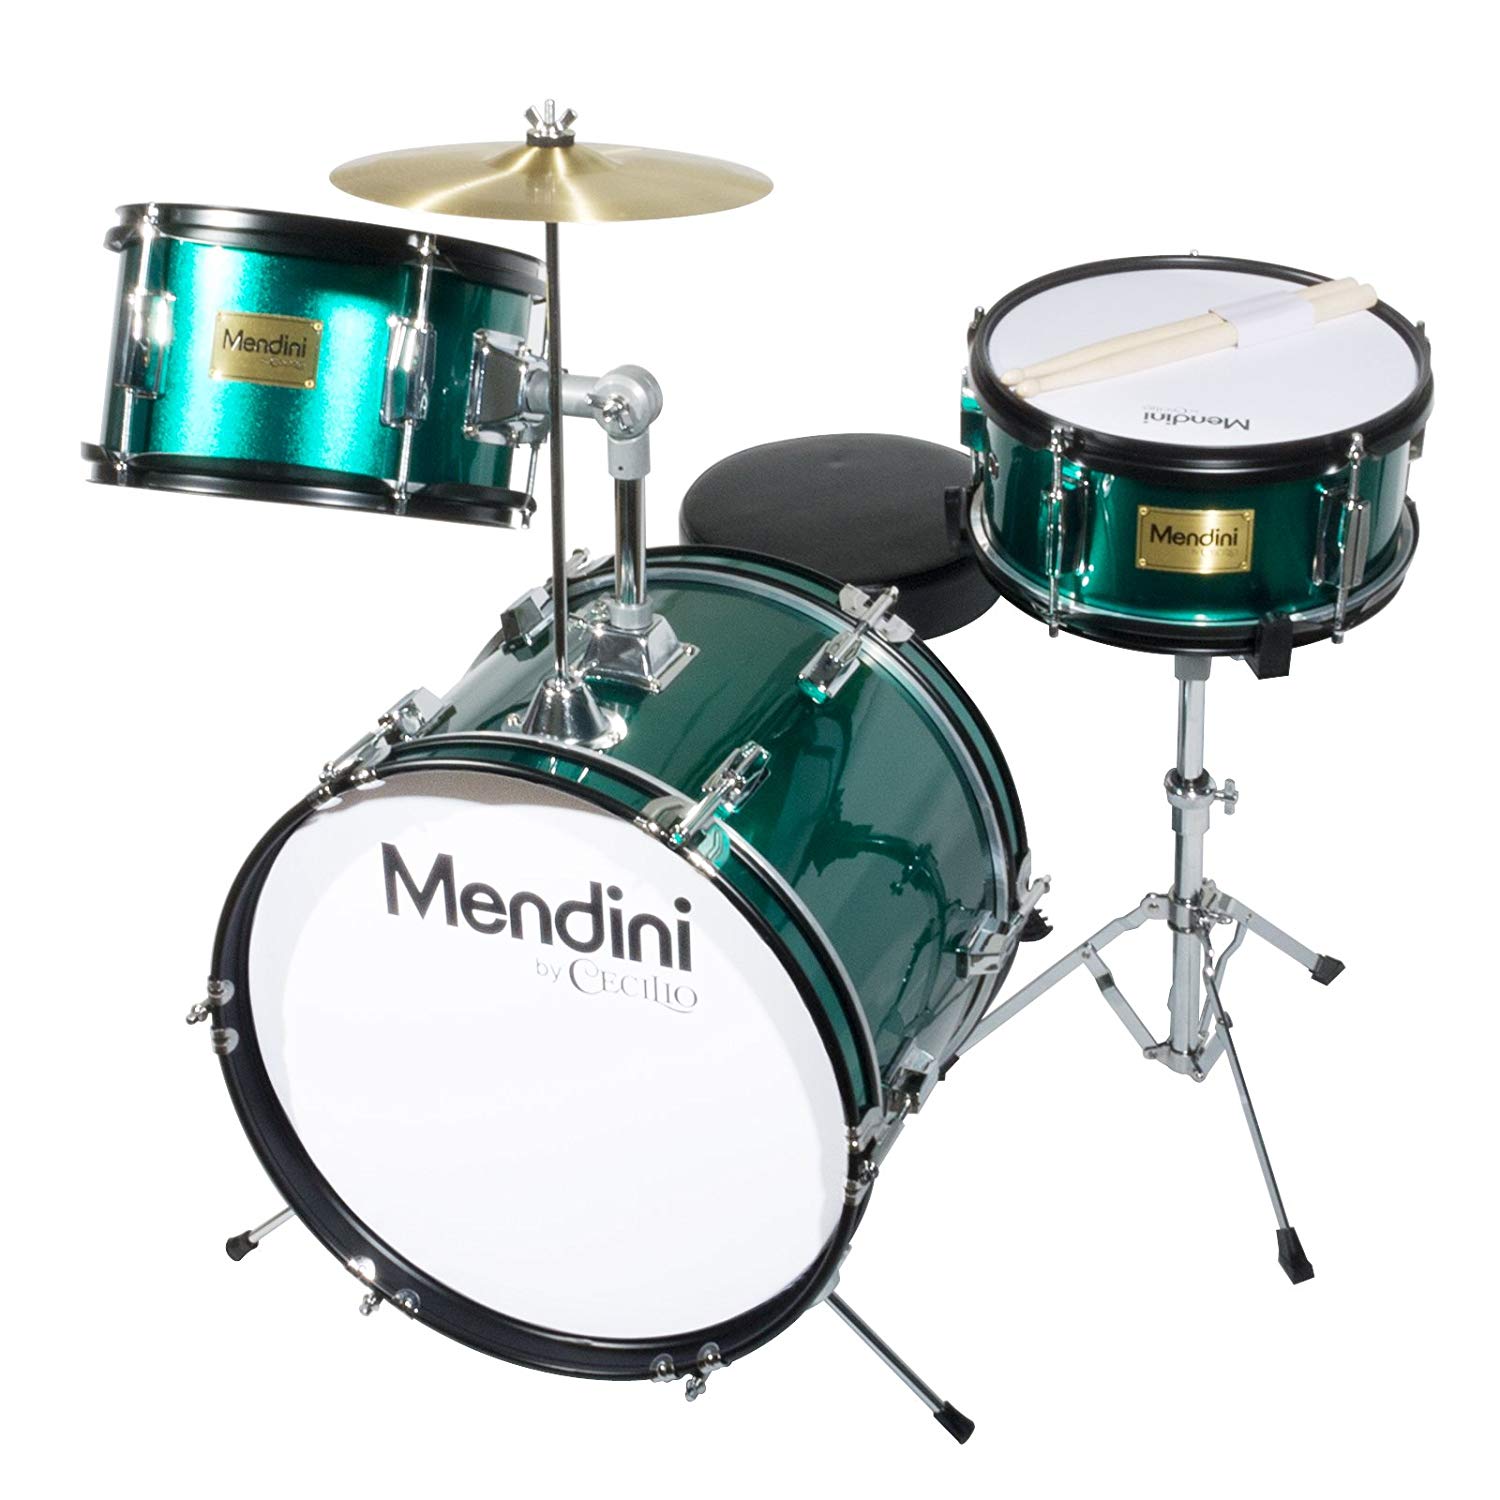 Mendini by Cecilio 16 inch 3-Piece Kids/Junior Drum Set 